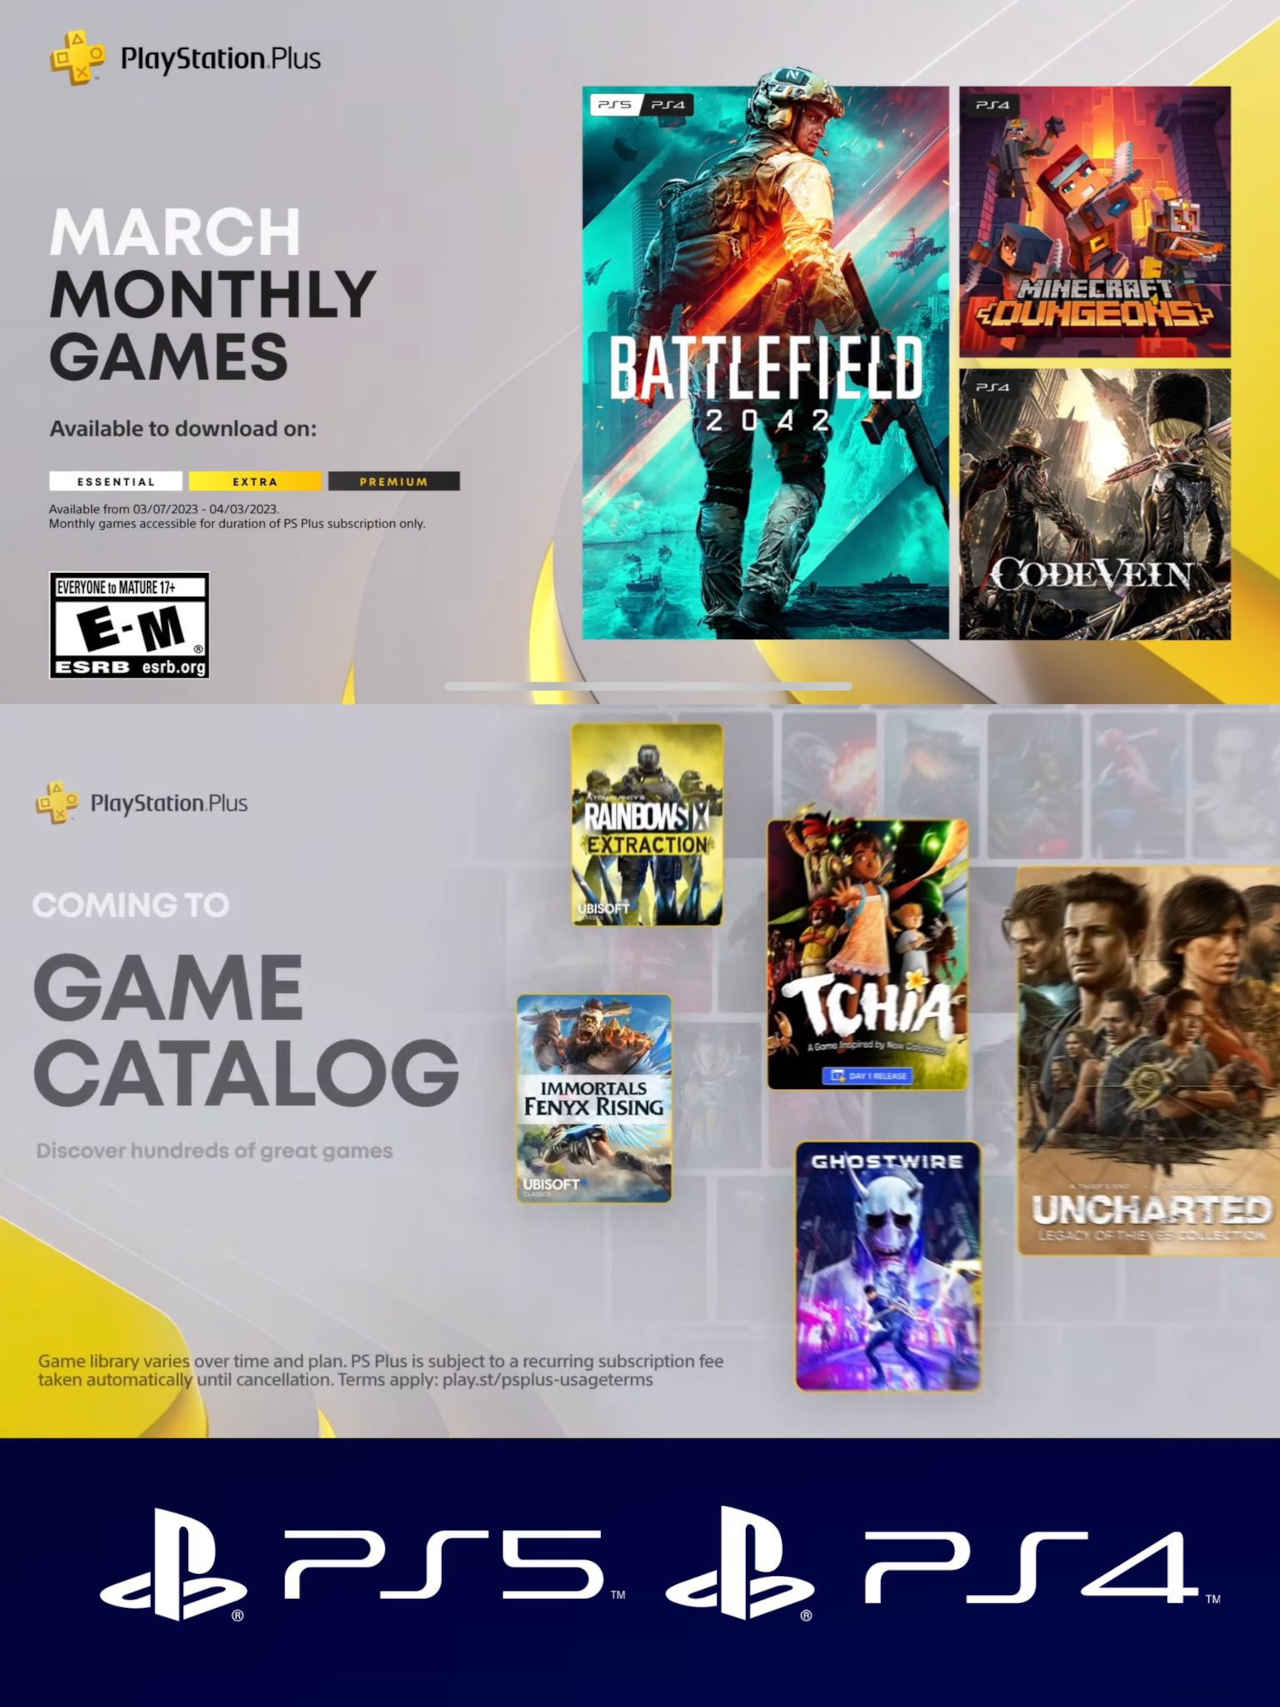 ¿Esto se siente tener Game Pass? Uncharted: Legacy of Thieves llega en marzo a PlayStation Plus